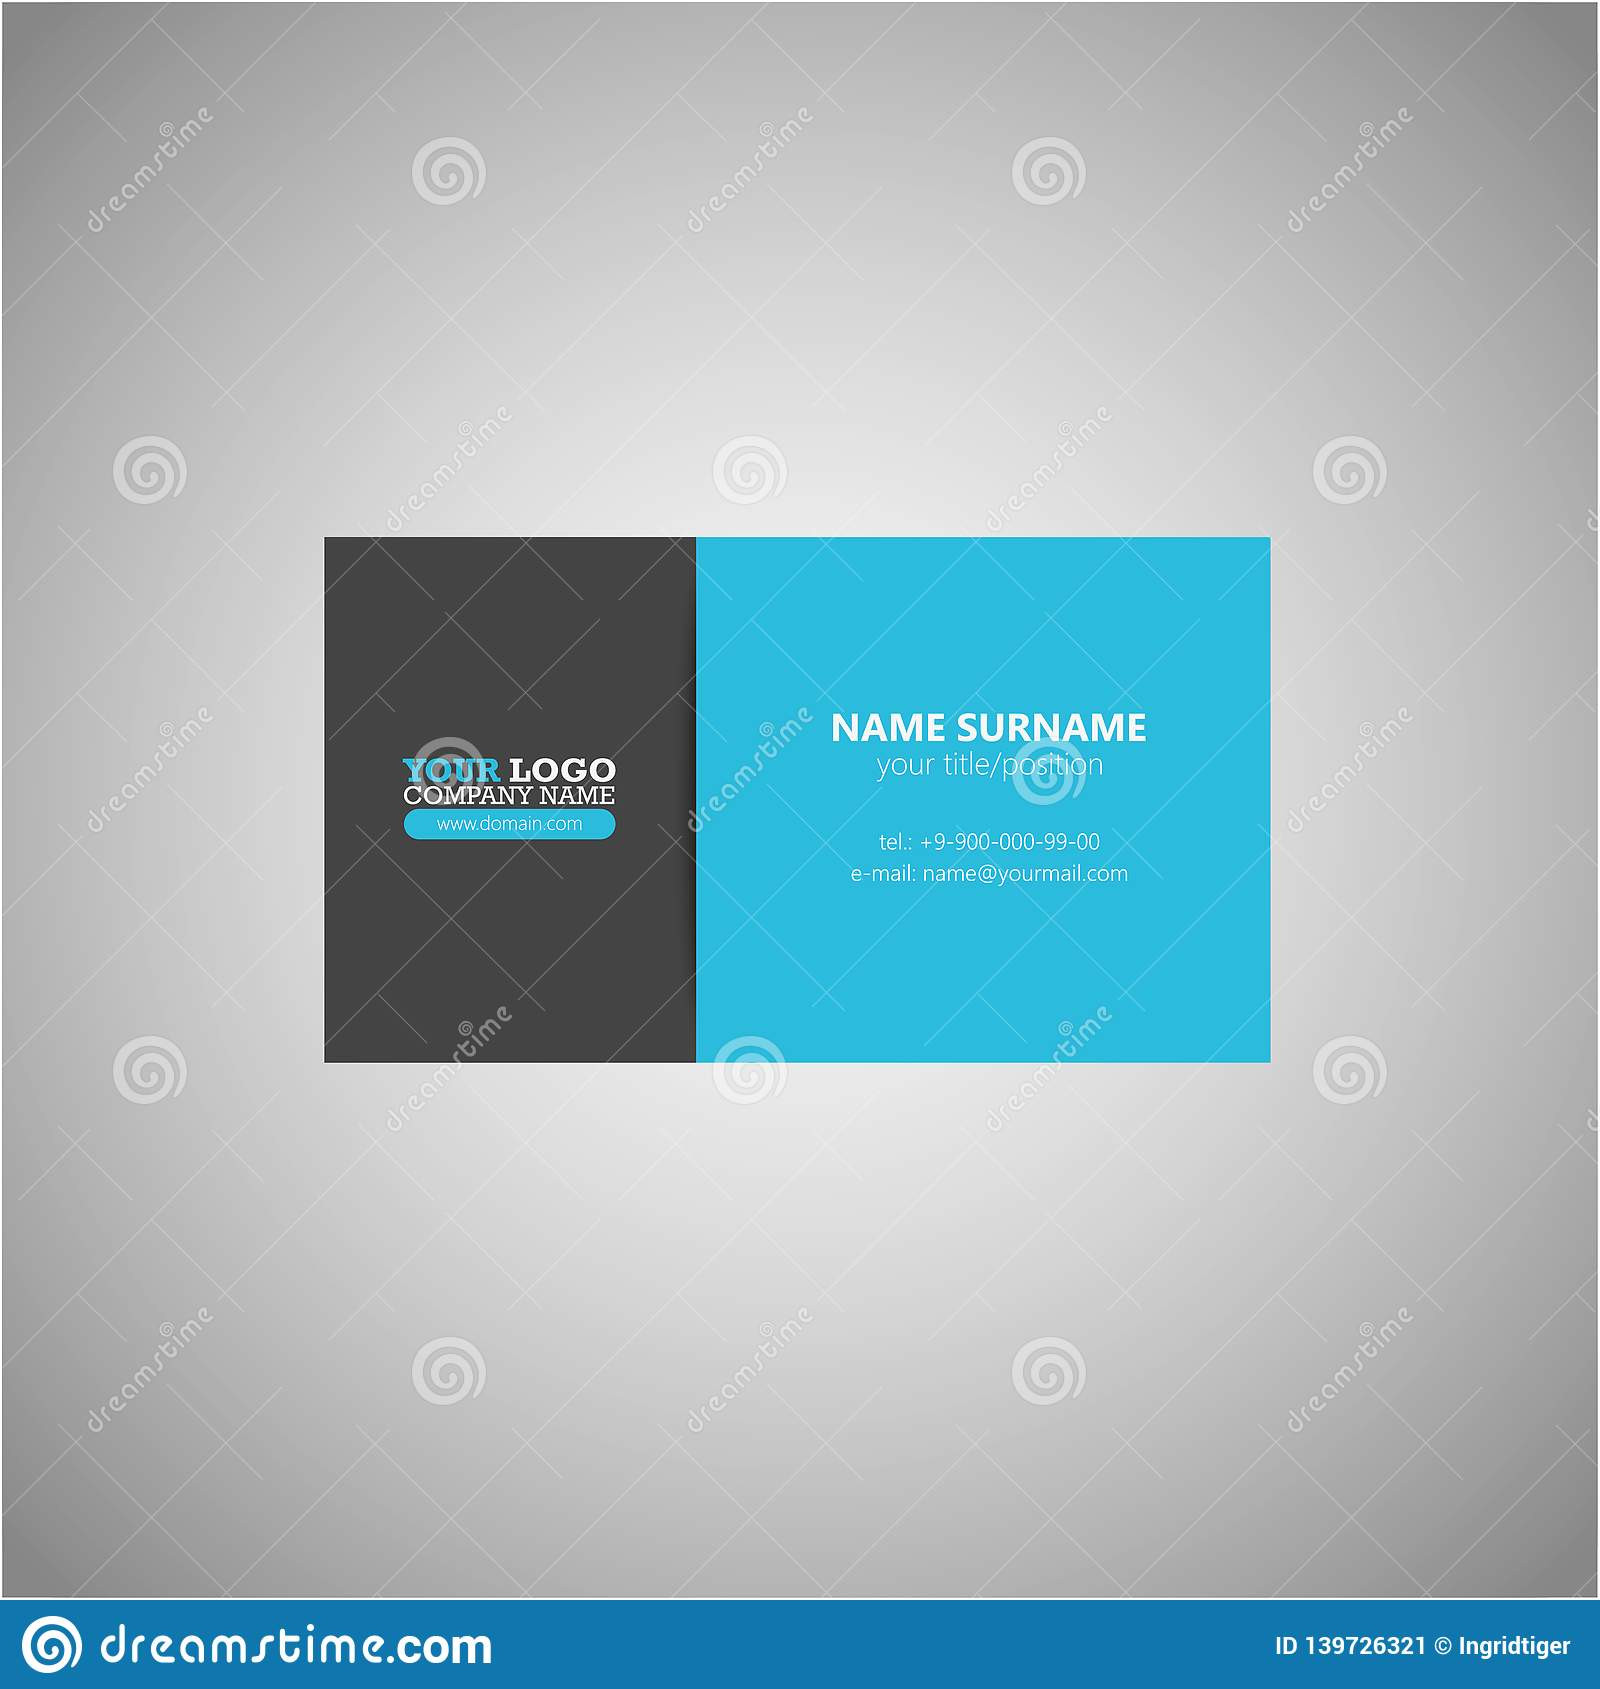 Modern Clean Business Card Template Stock Illustration Of Two Sided Business Card Template